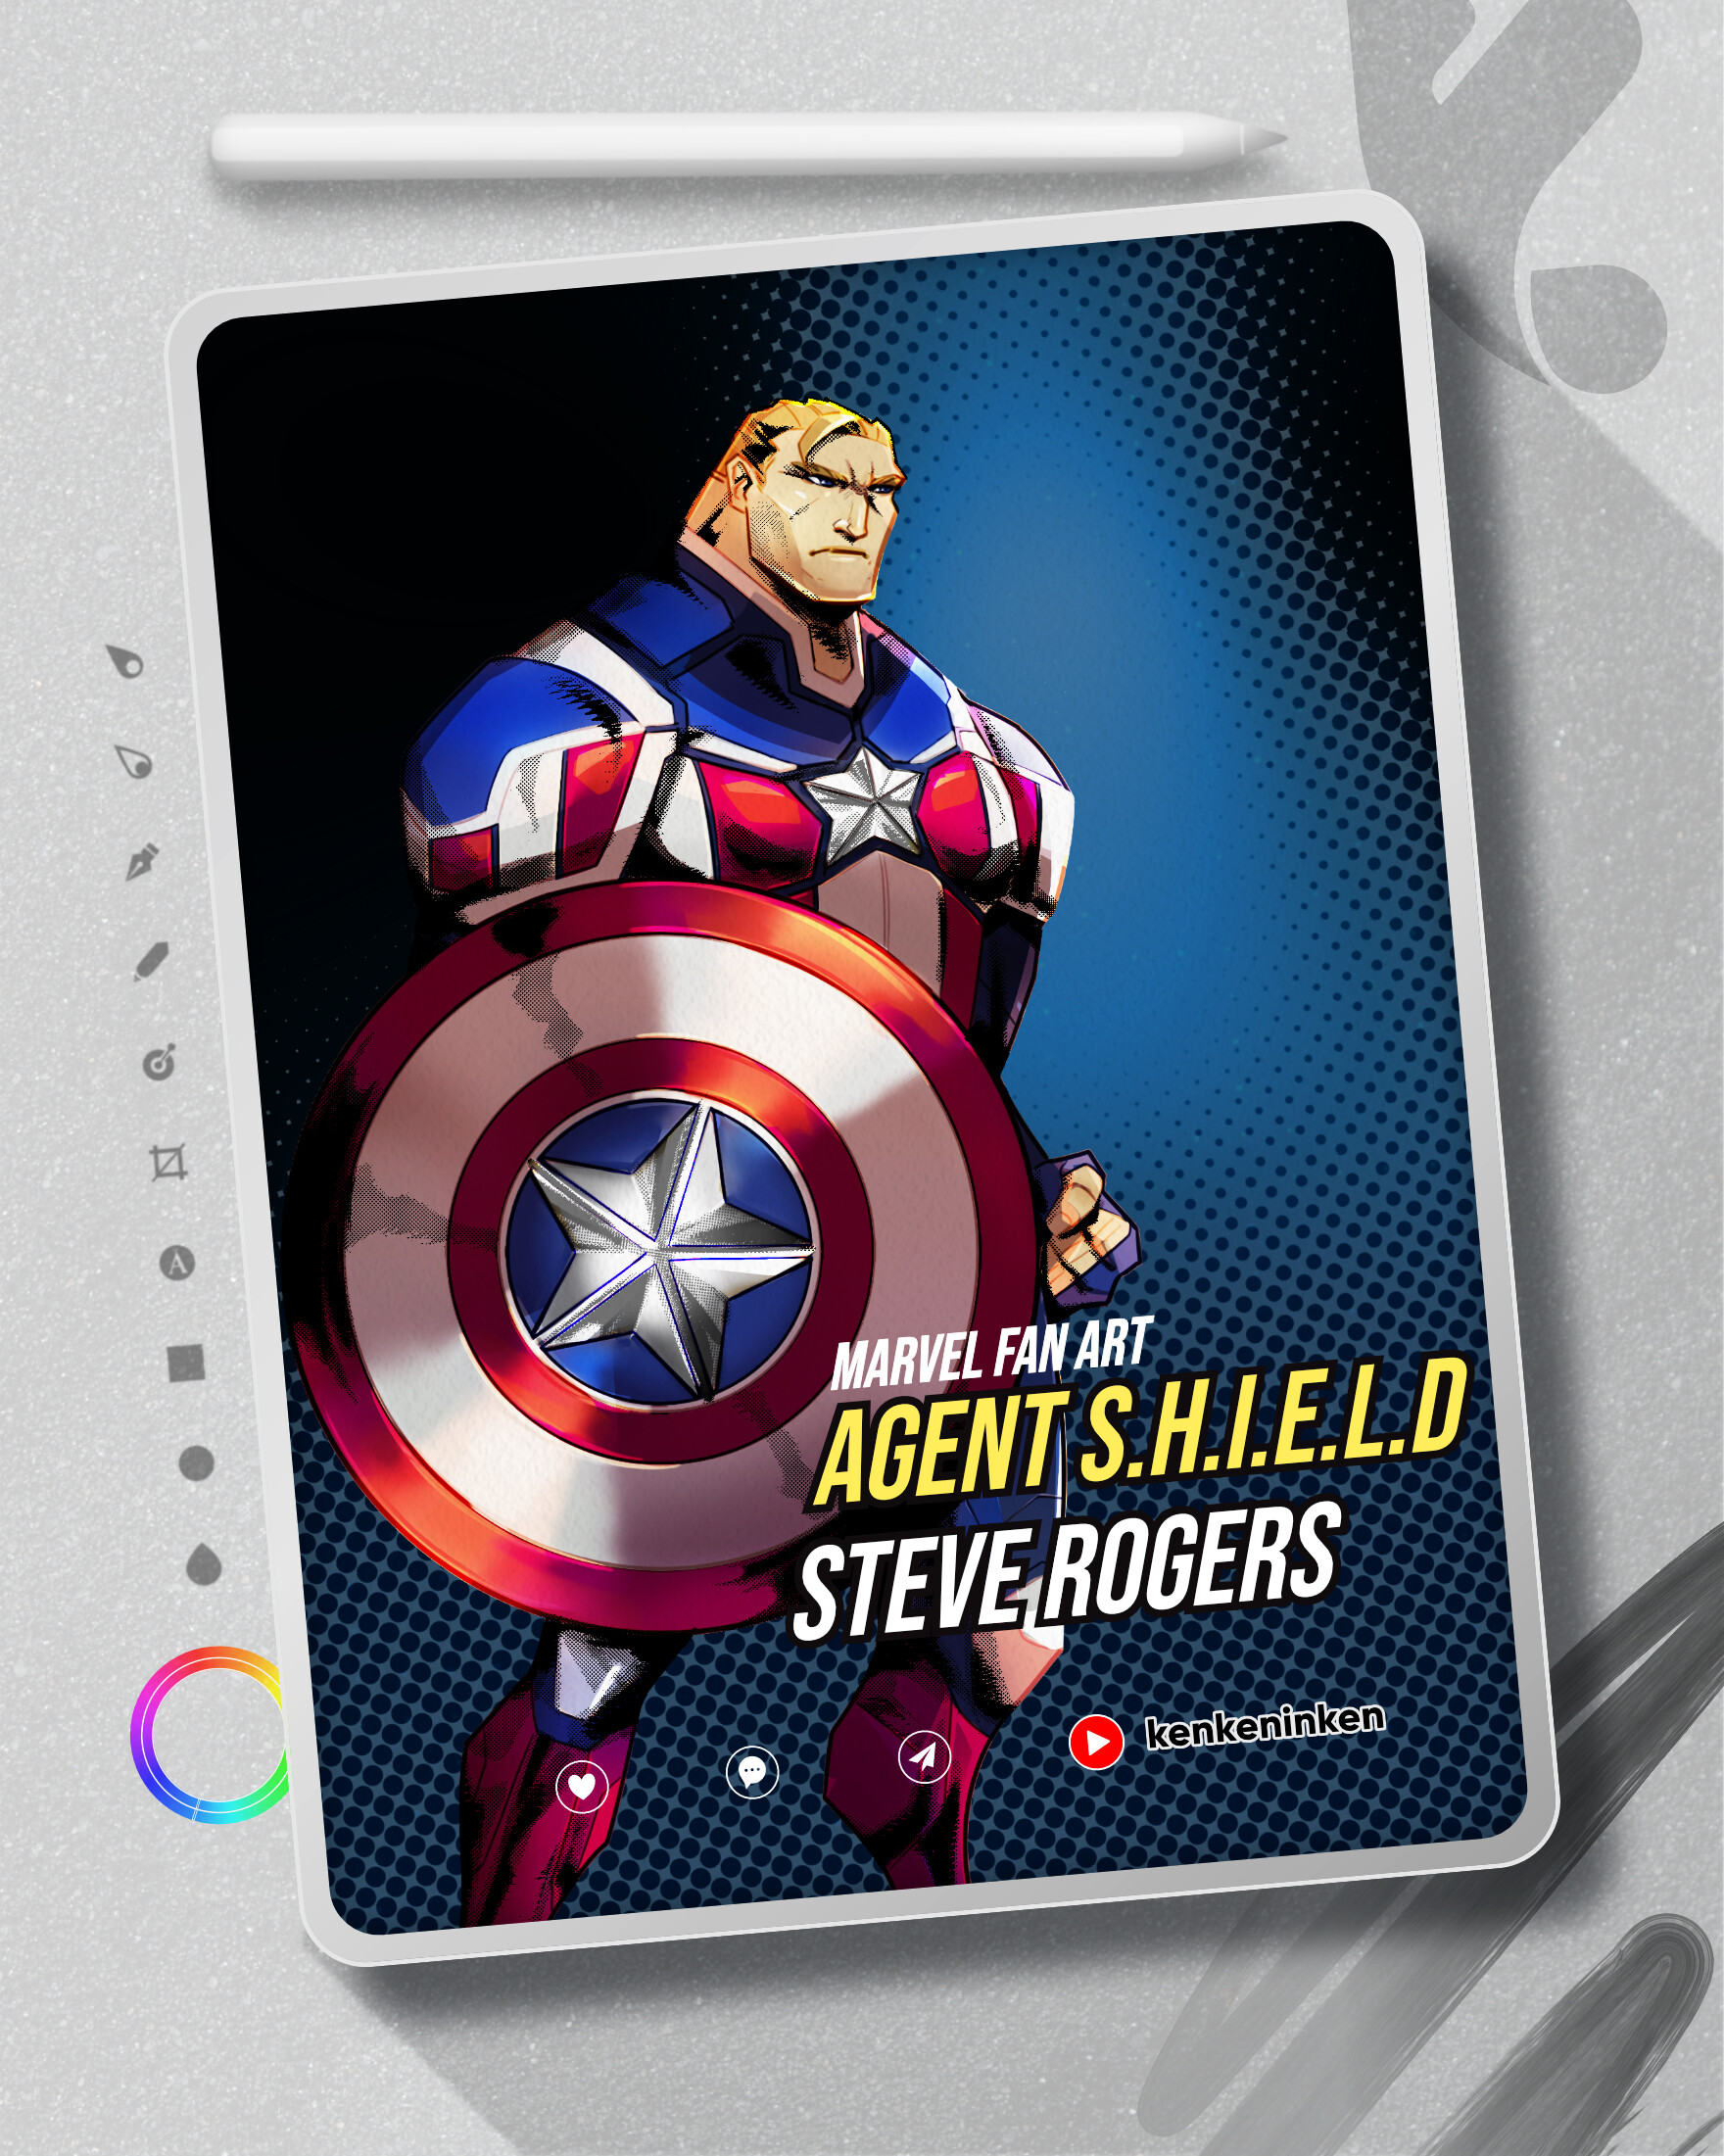 Ken Kenin Ken - ⭐ Marvel Fan Art - Agent S.H.I.E.L.D Steve Rogers